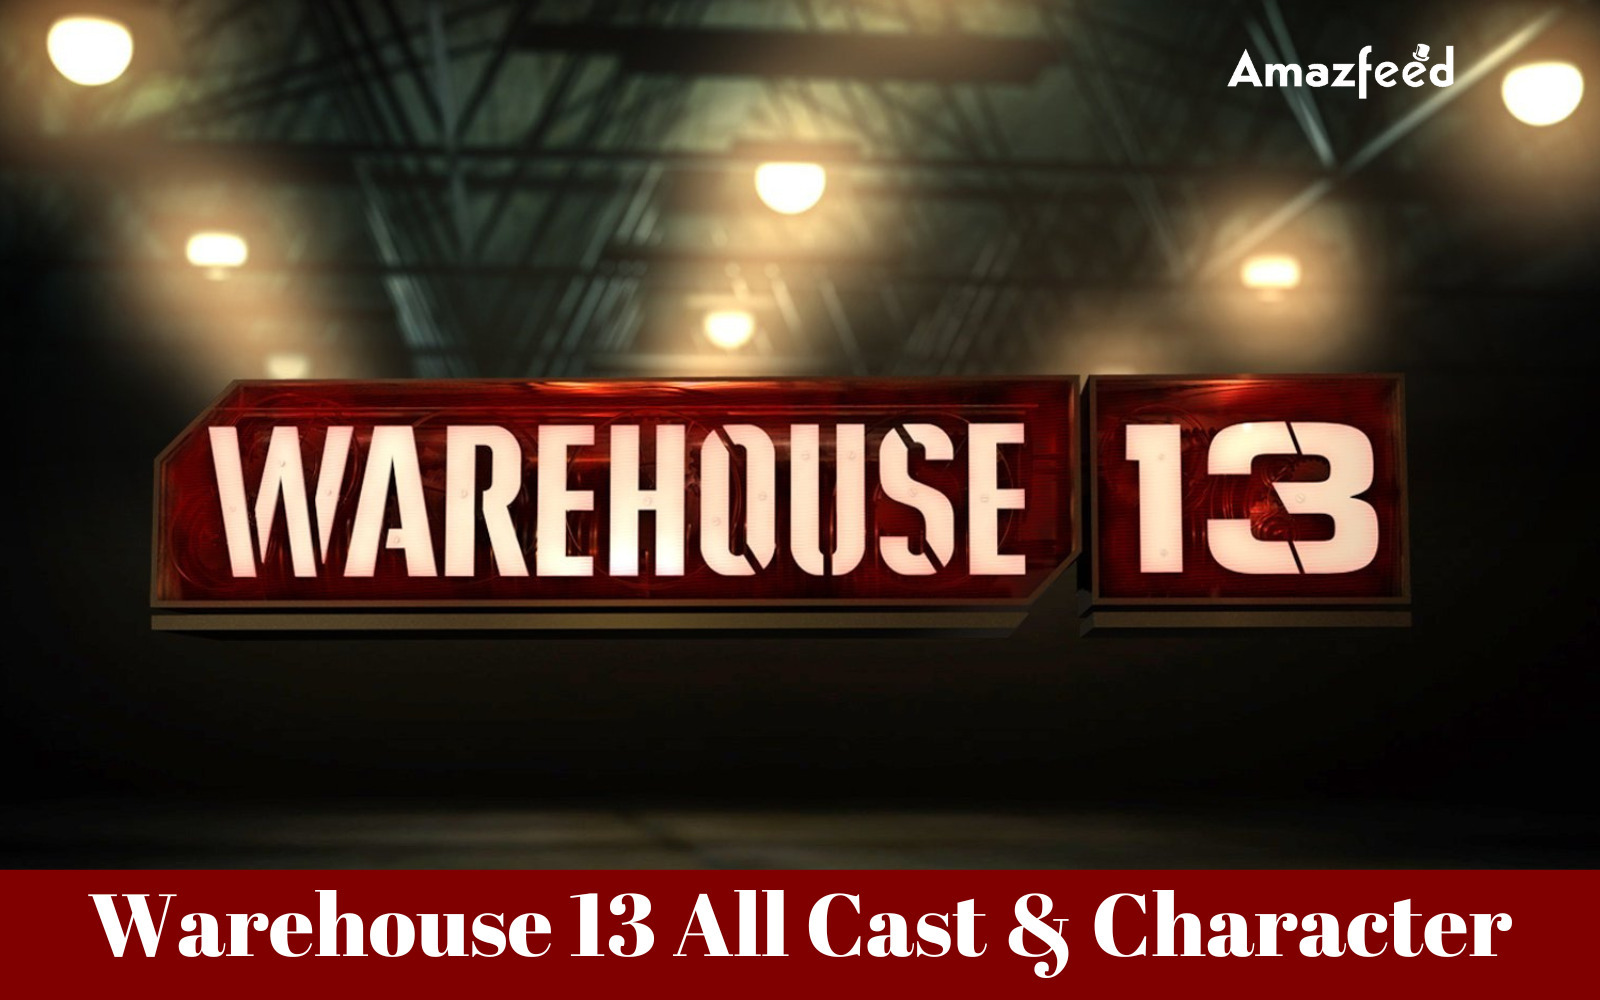 Warehouse 13 cast